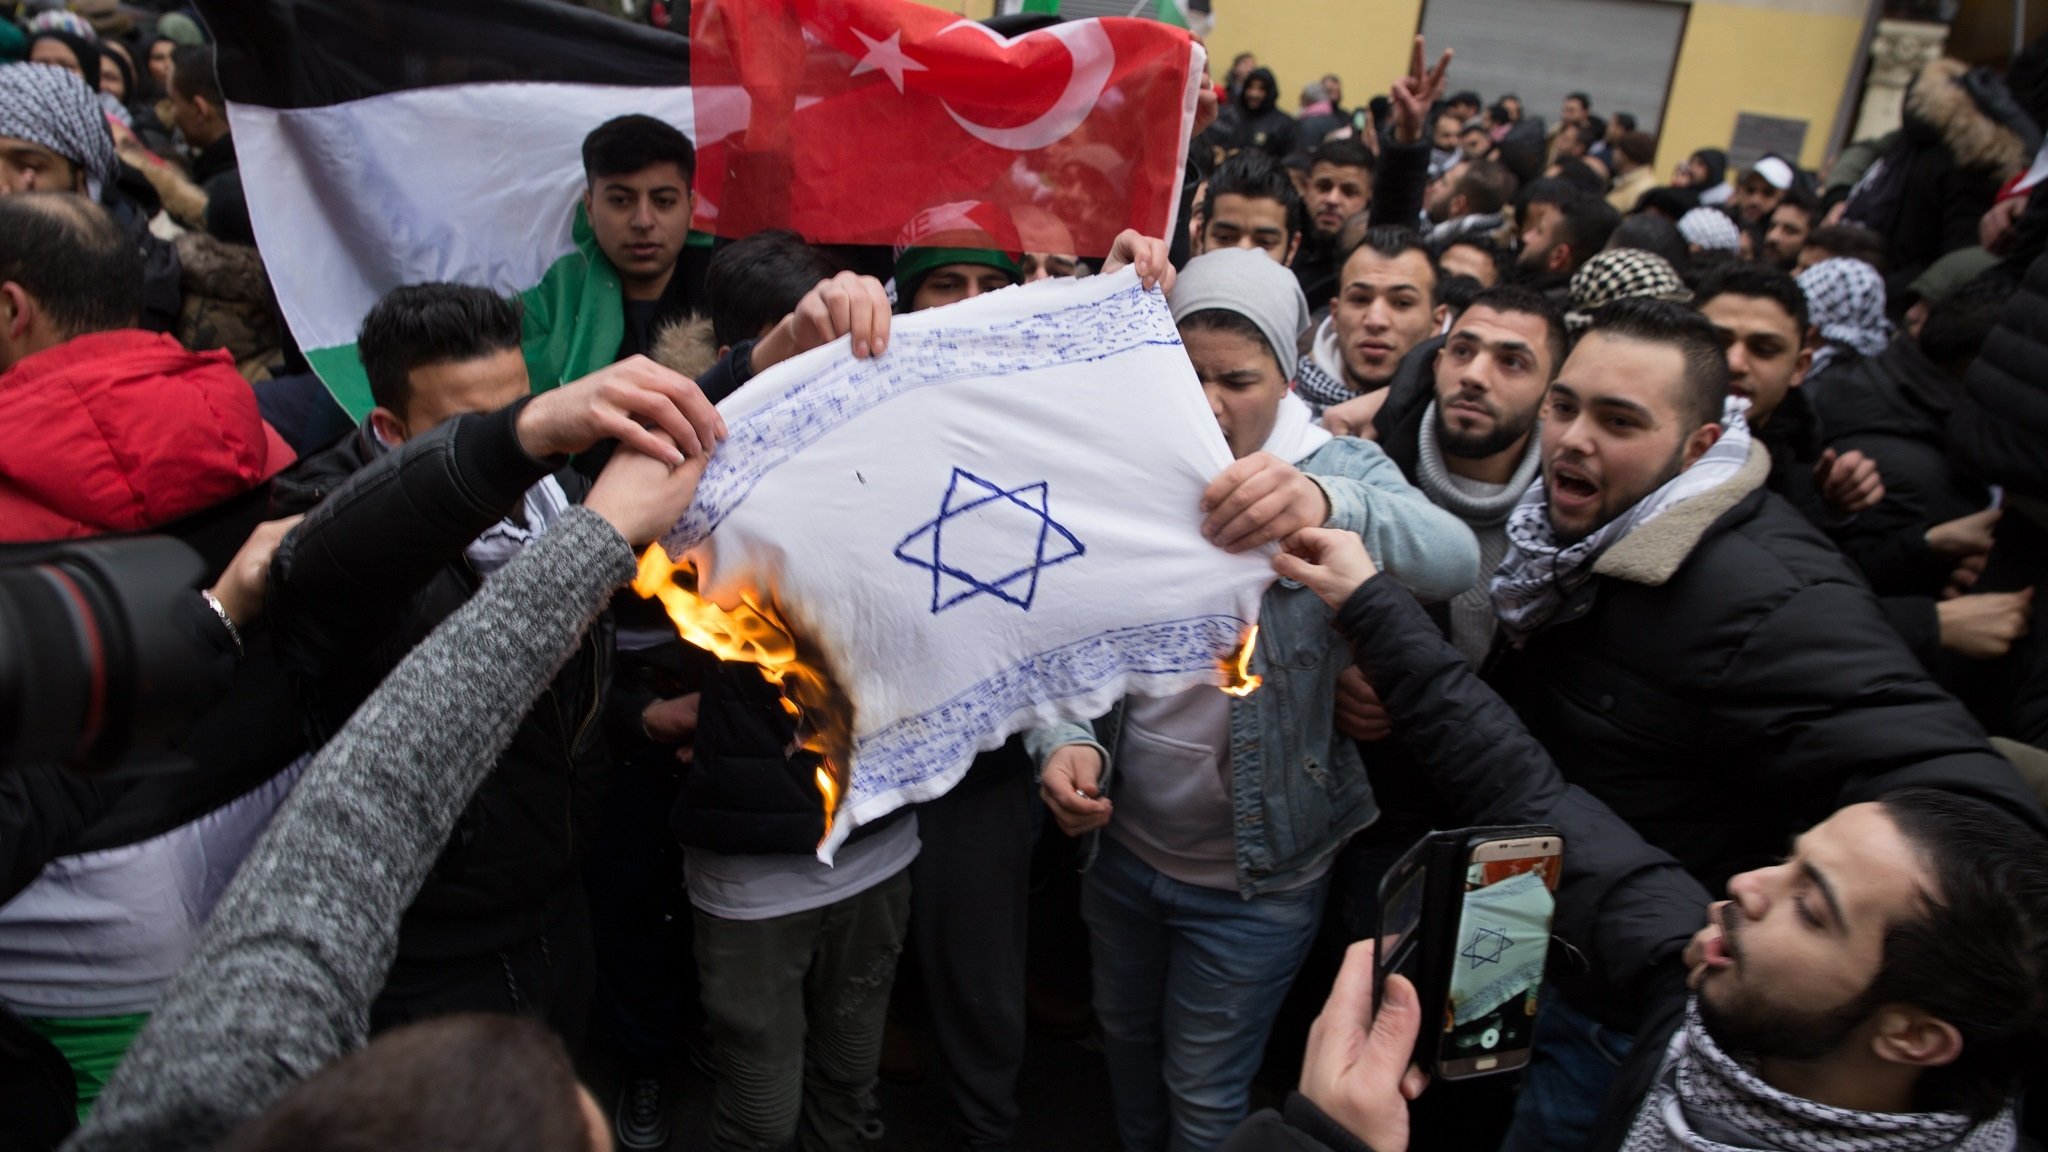 Demonstranten in Berlin-Neukölln brennen 2017 israelische Fahne ab